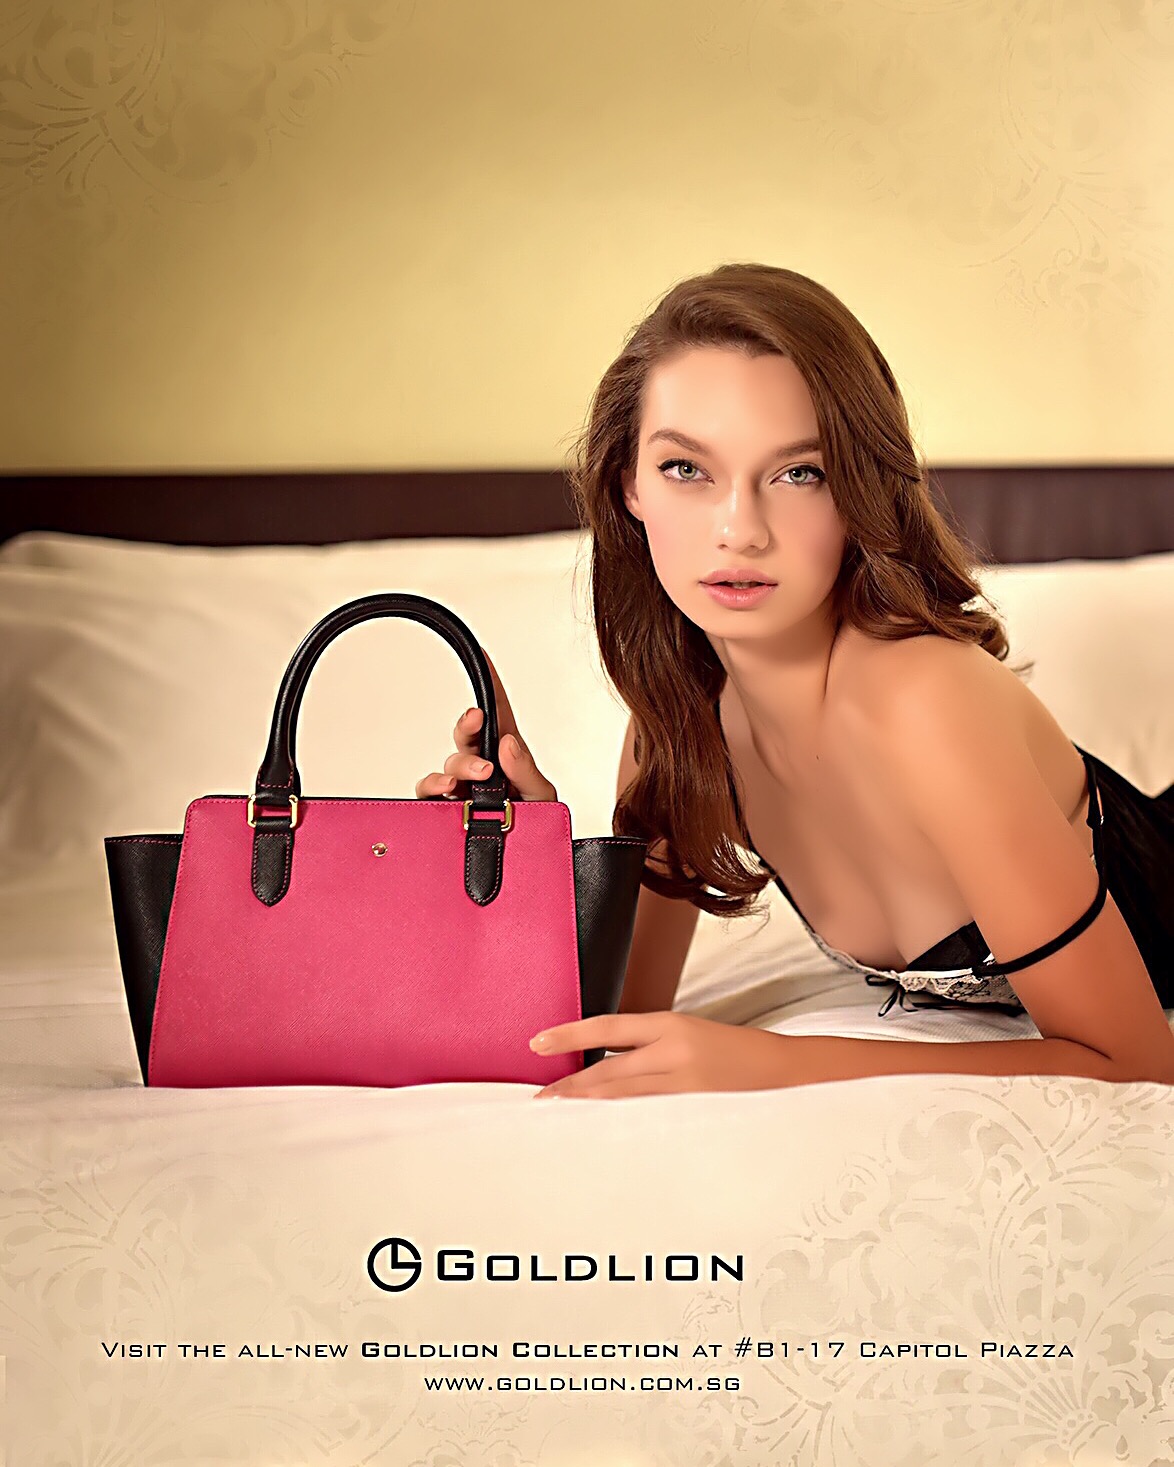 Goldlion re-branding Campaign 3